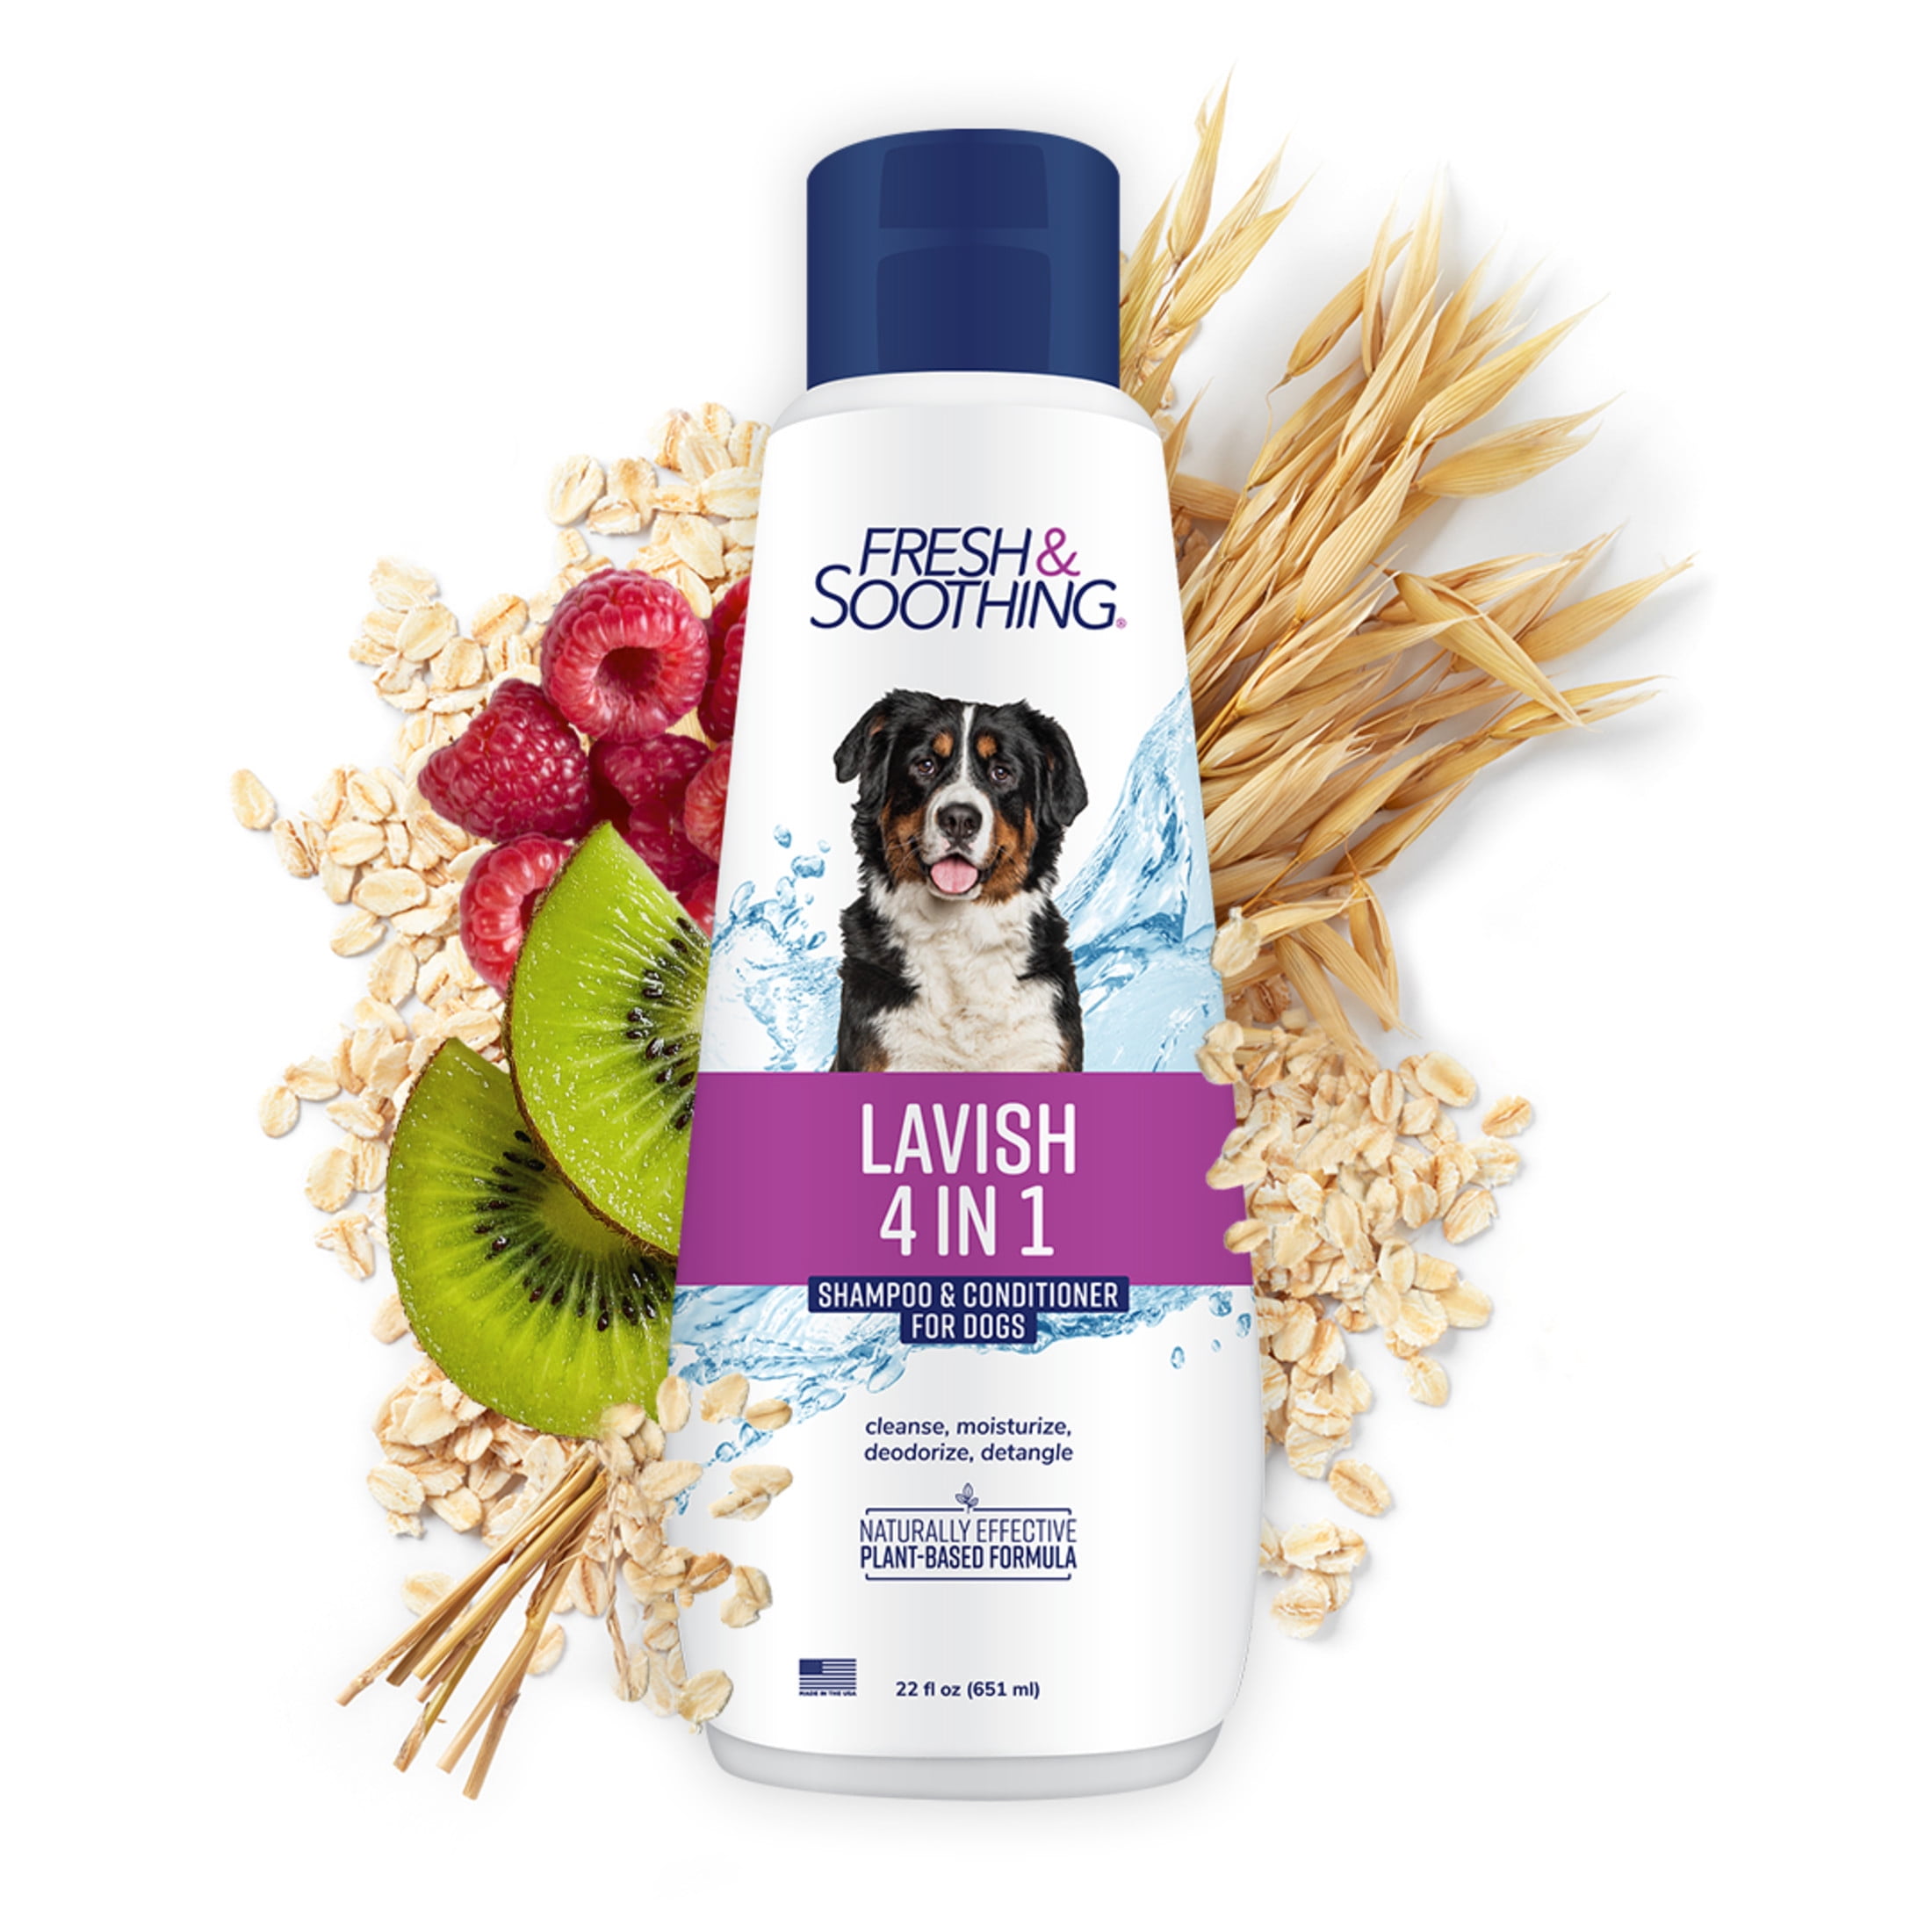 Pets Empire Dog Perfume (Angel Pet) - (135 ML) - Dogomart